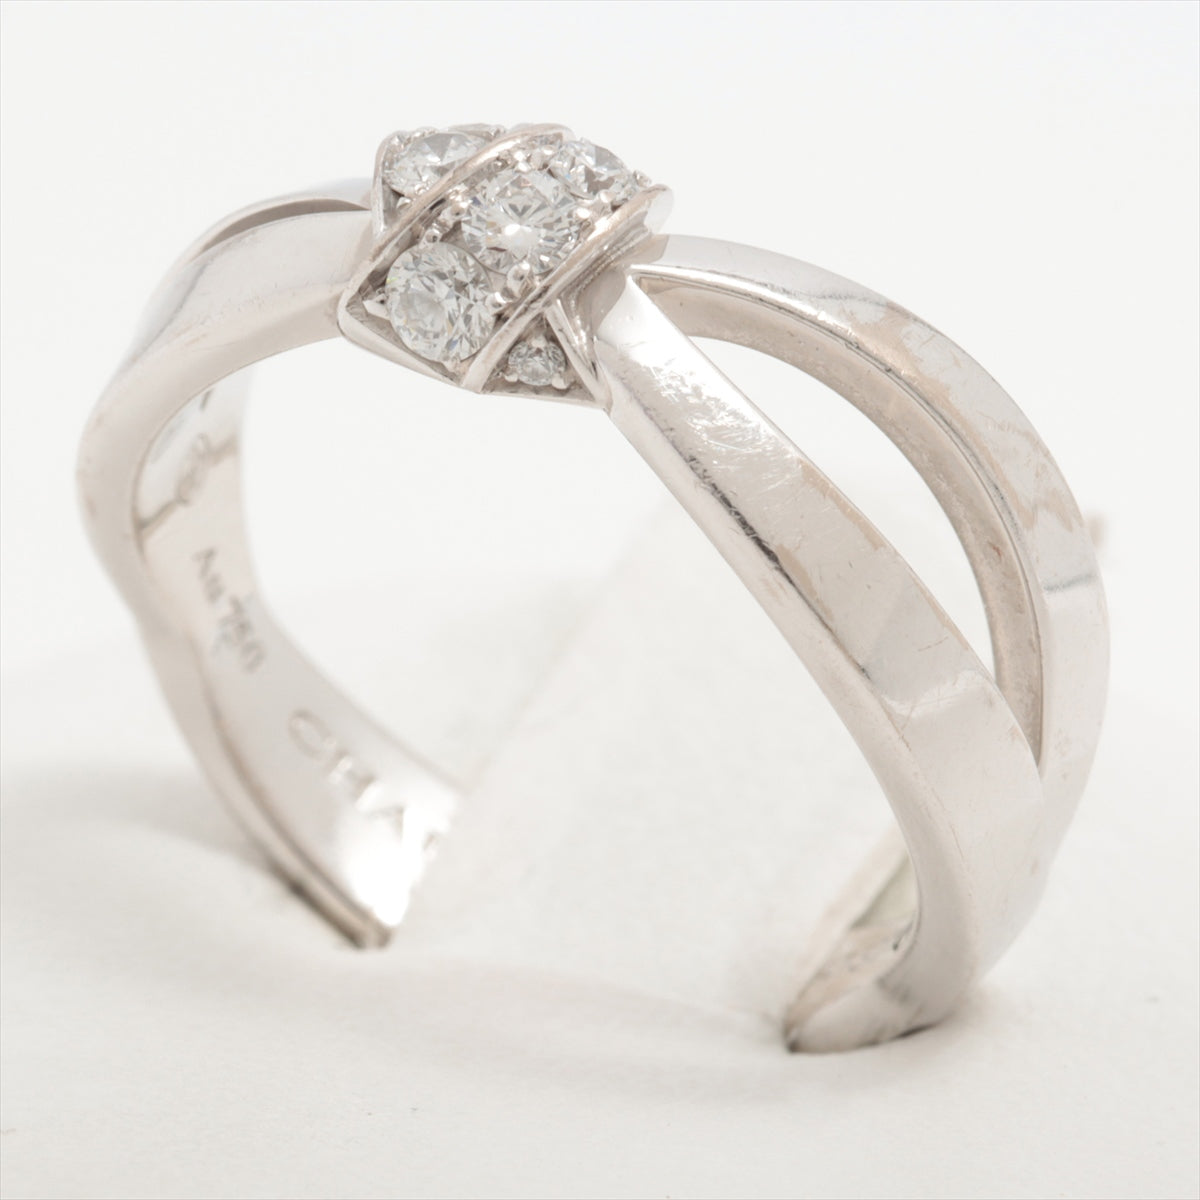 Shimmer Lian Seduction Diamond Ring 750 (WG) 5.3g 51 083053-051